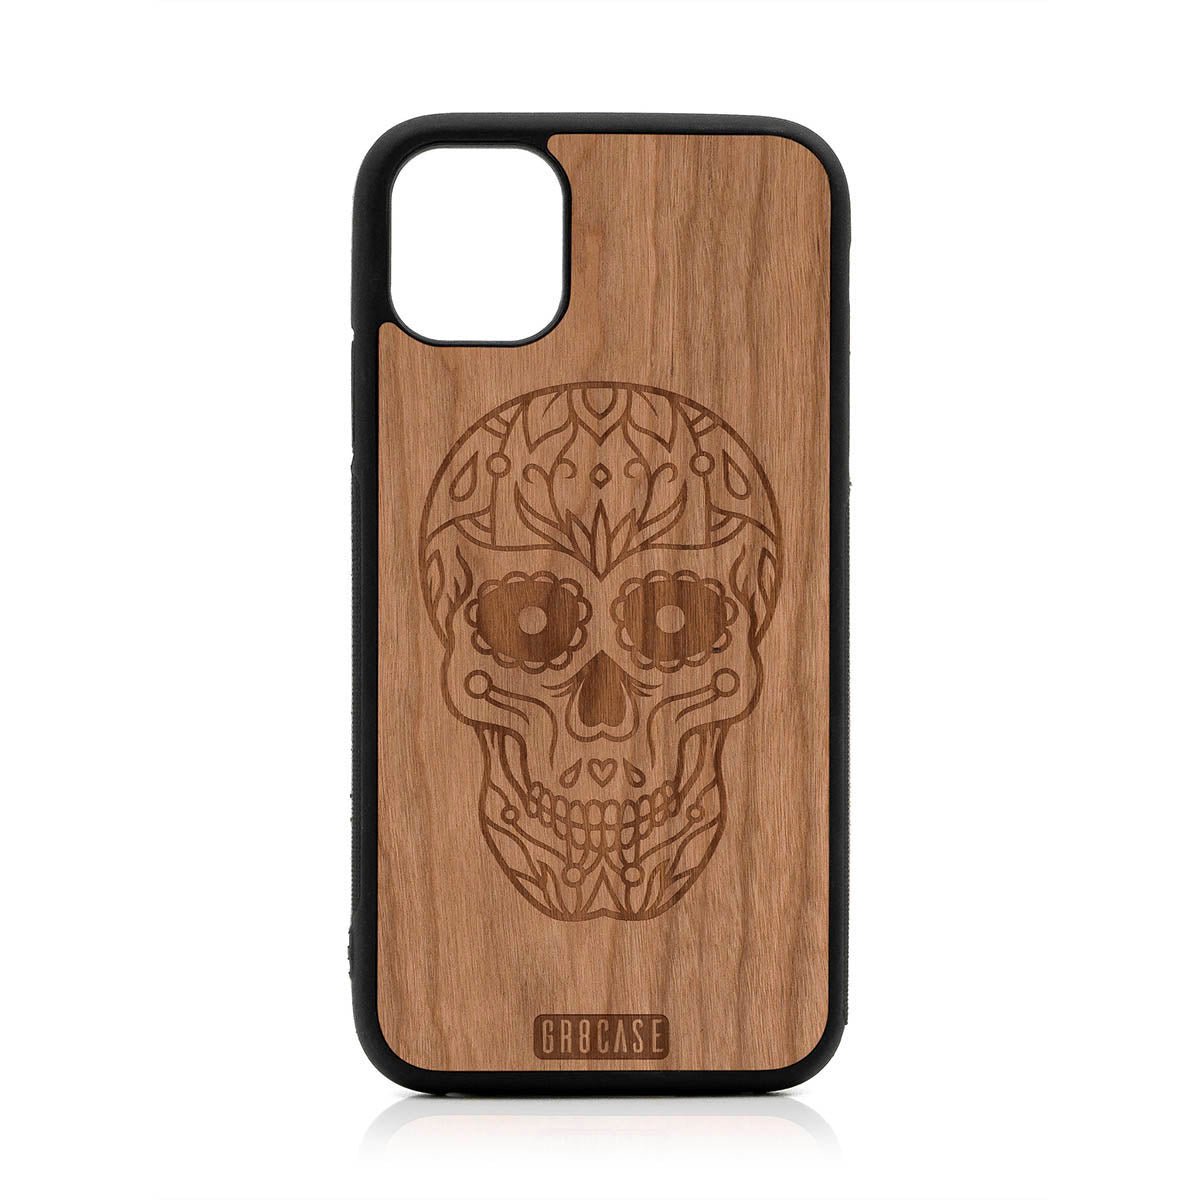 Sugar Skull Design Wood Case For iPhone 11 by GR8CASE